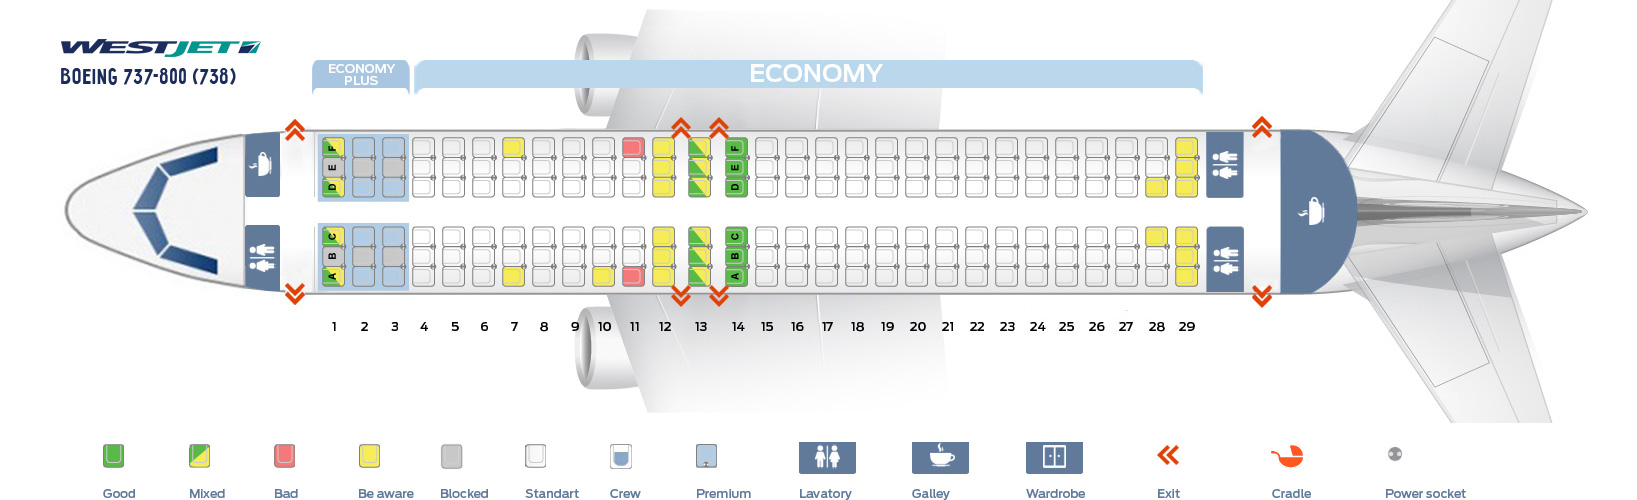 Westjet 737 Seating Chart